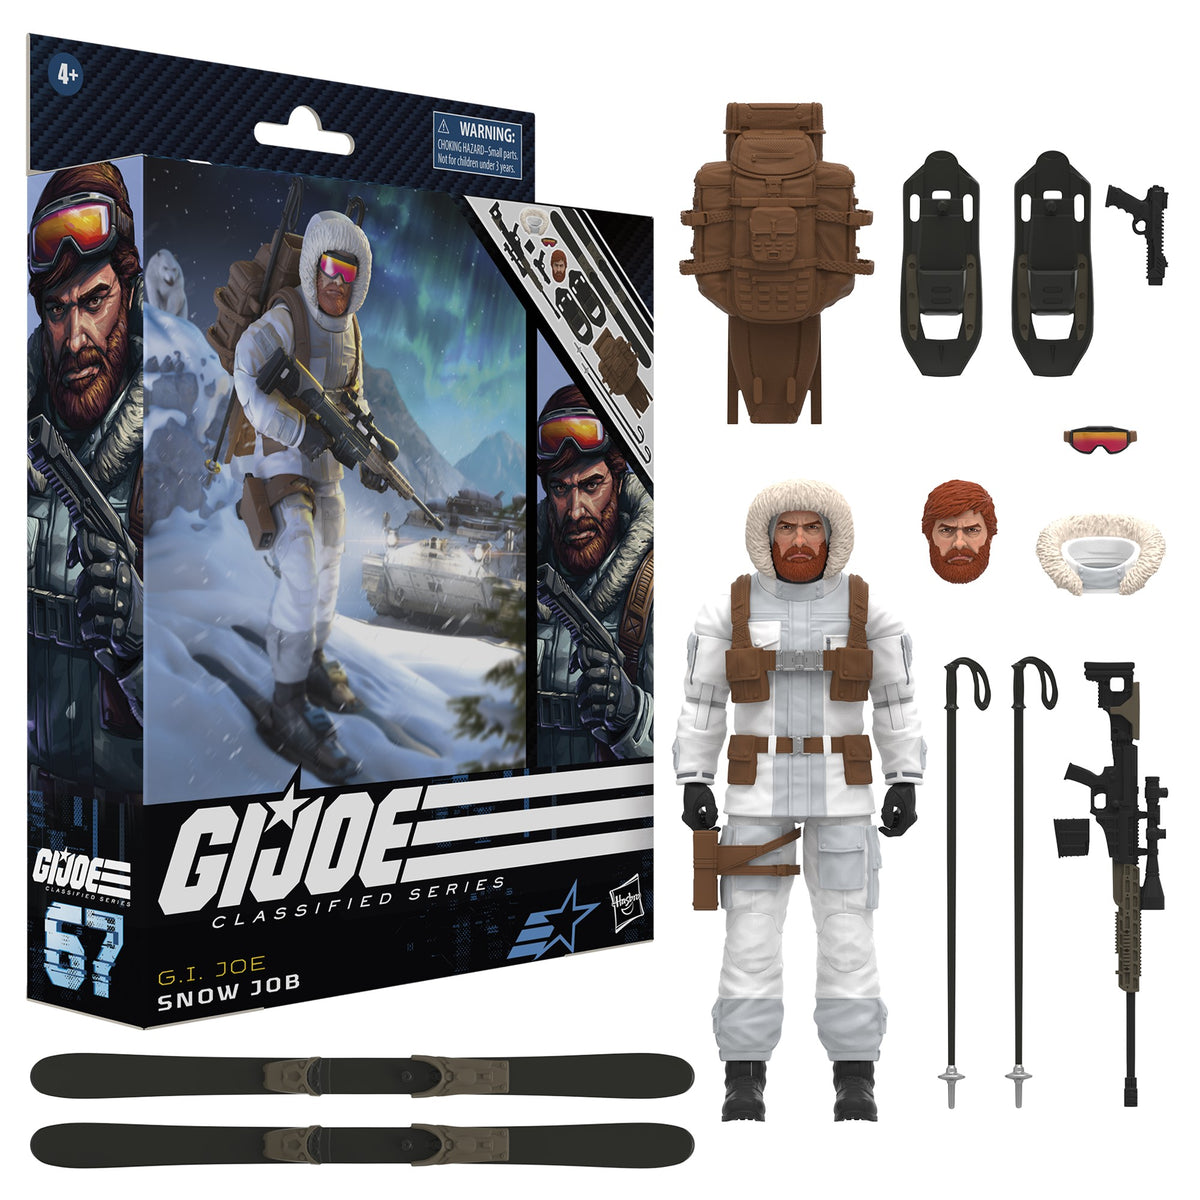 G.I. Joe Classified Series Snow Job, 67 – Hasbro Pulse